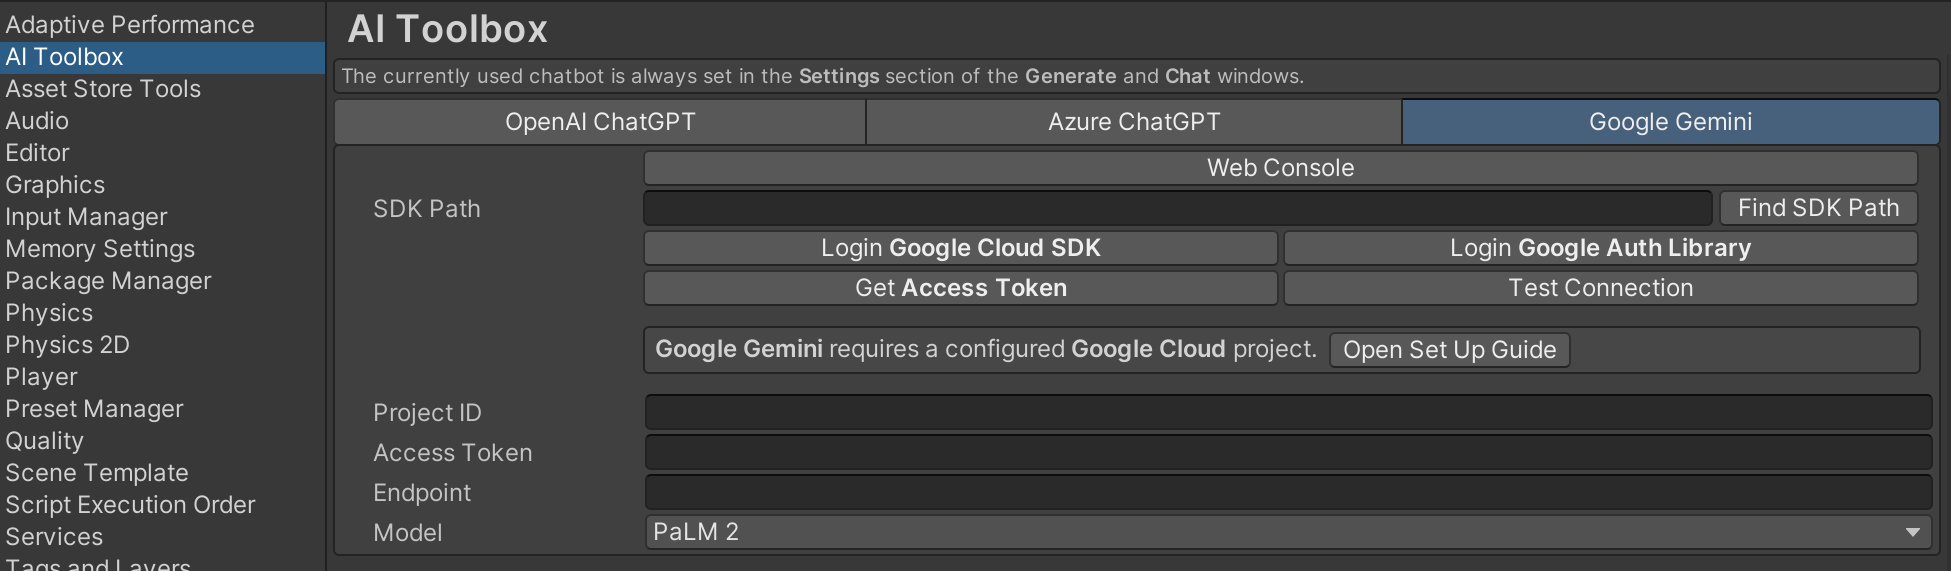 Gemini API Key and other settings